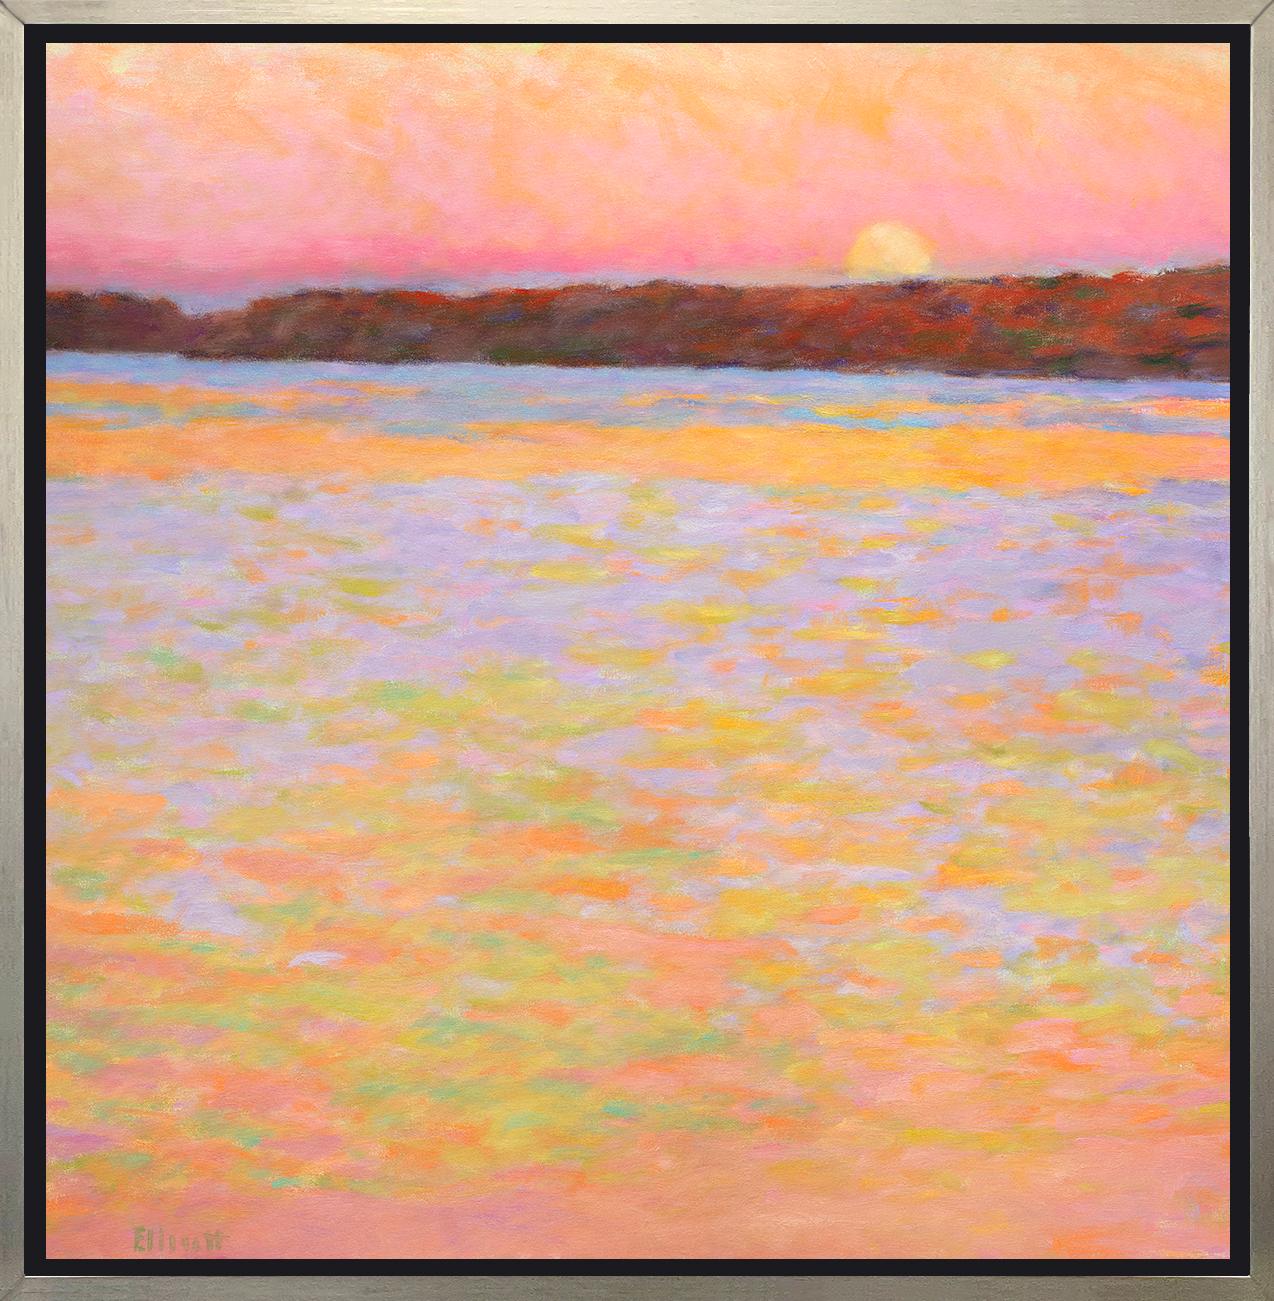 Ken Elliott Landscape Print - "Tangerine Evening II, " Framed Limited Edition Giclee Print, 36" x 36"